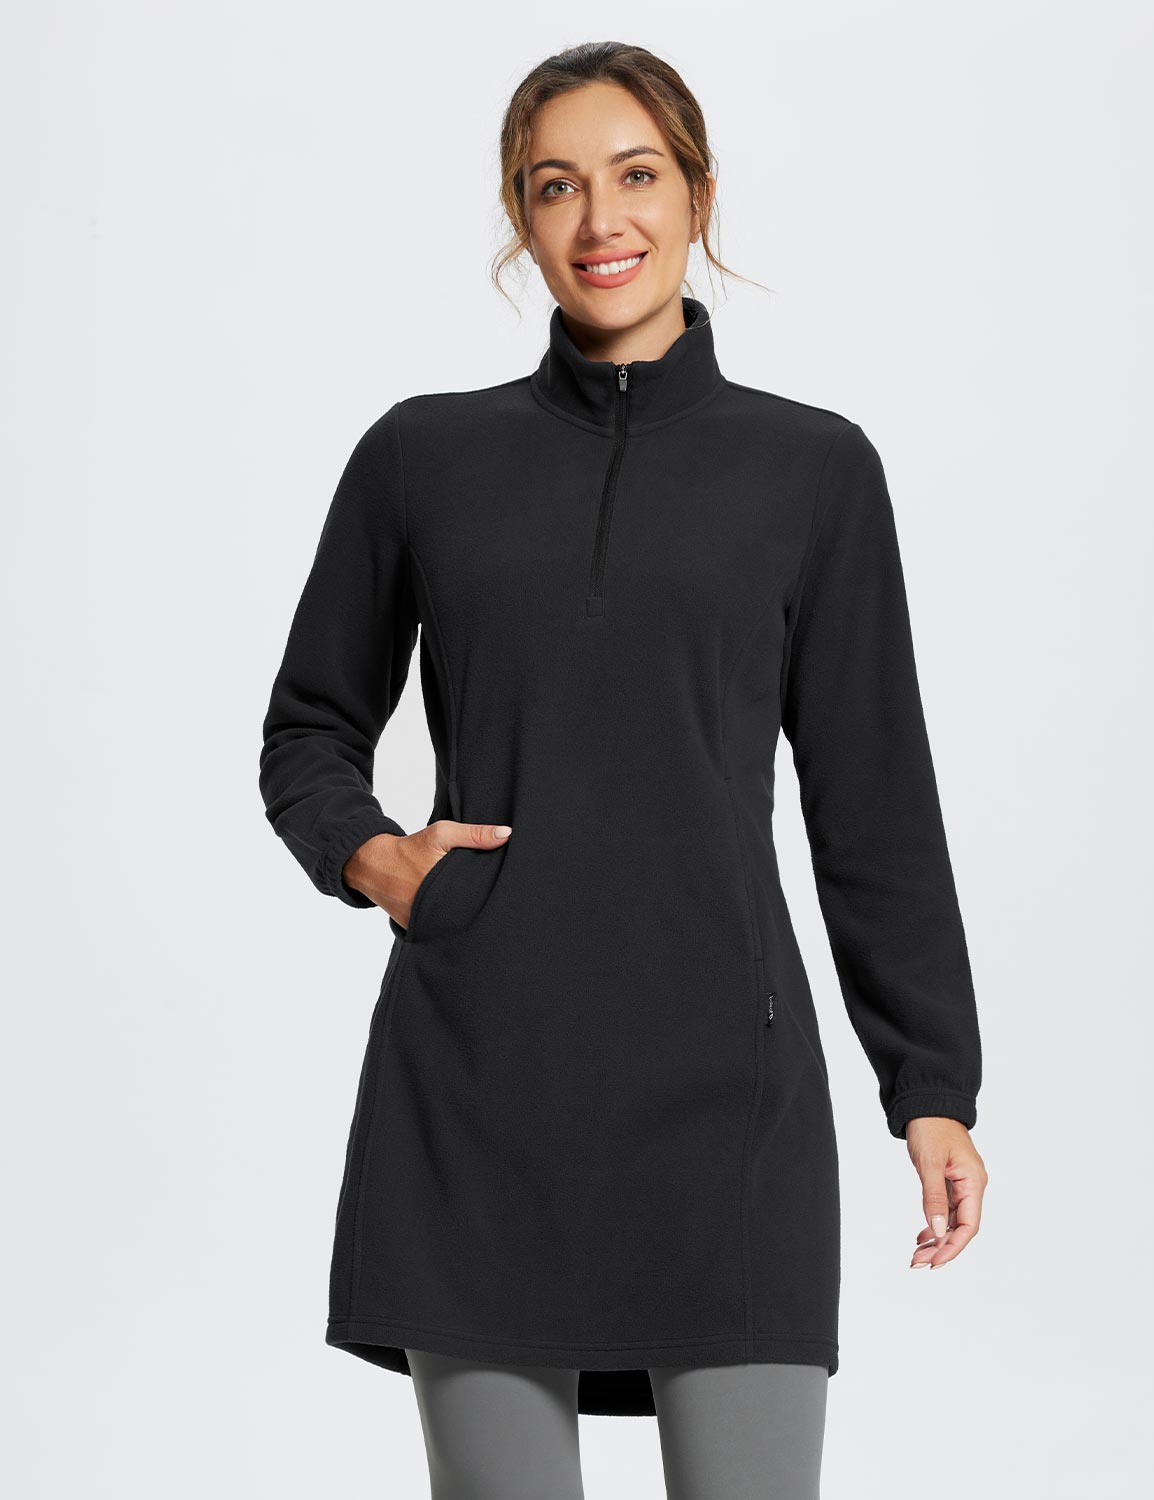 Baleaf Women's Long-Sleeve Quarter Zip Thermal Dress dga069 Black Main